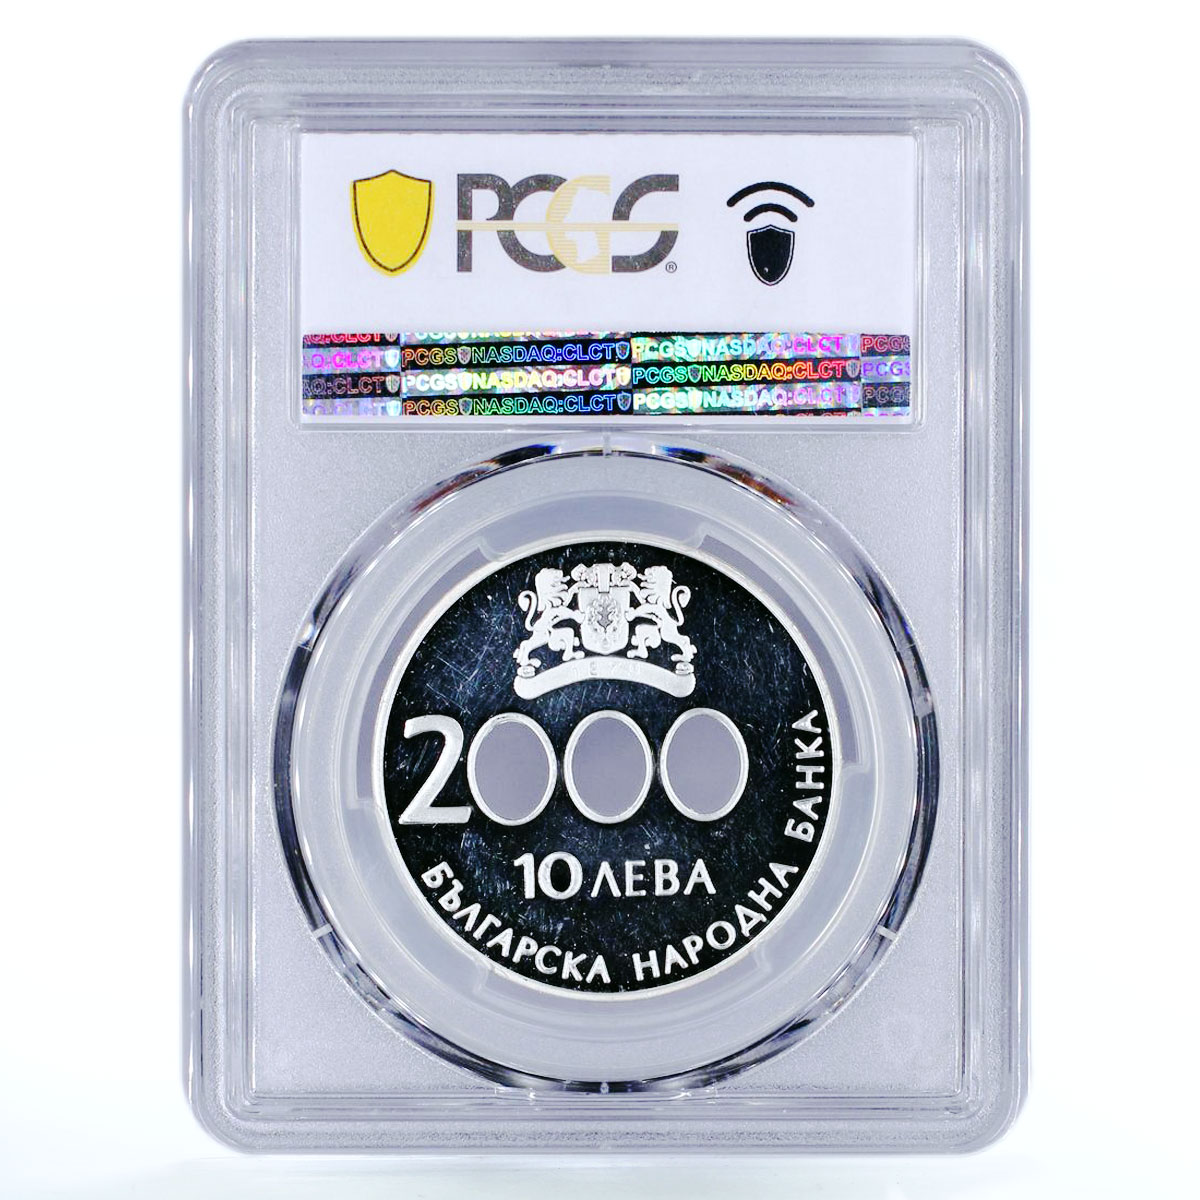 Bulgaria 10 leva The Beginning of the New Millennium PR64 PCGS silver coin 2000